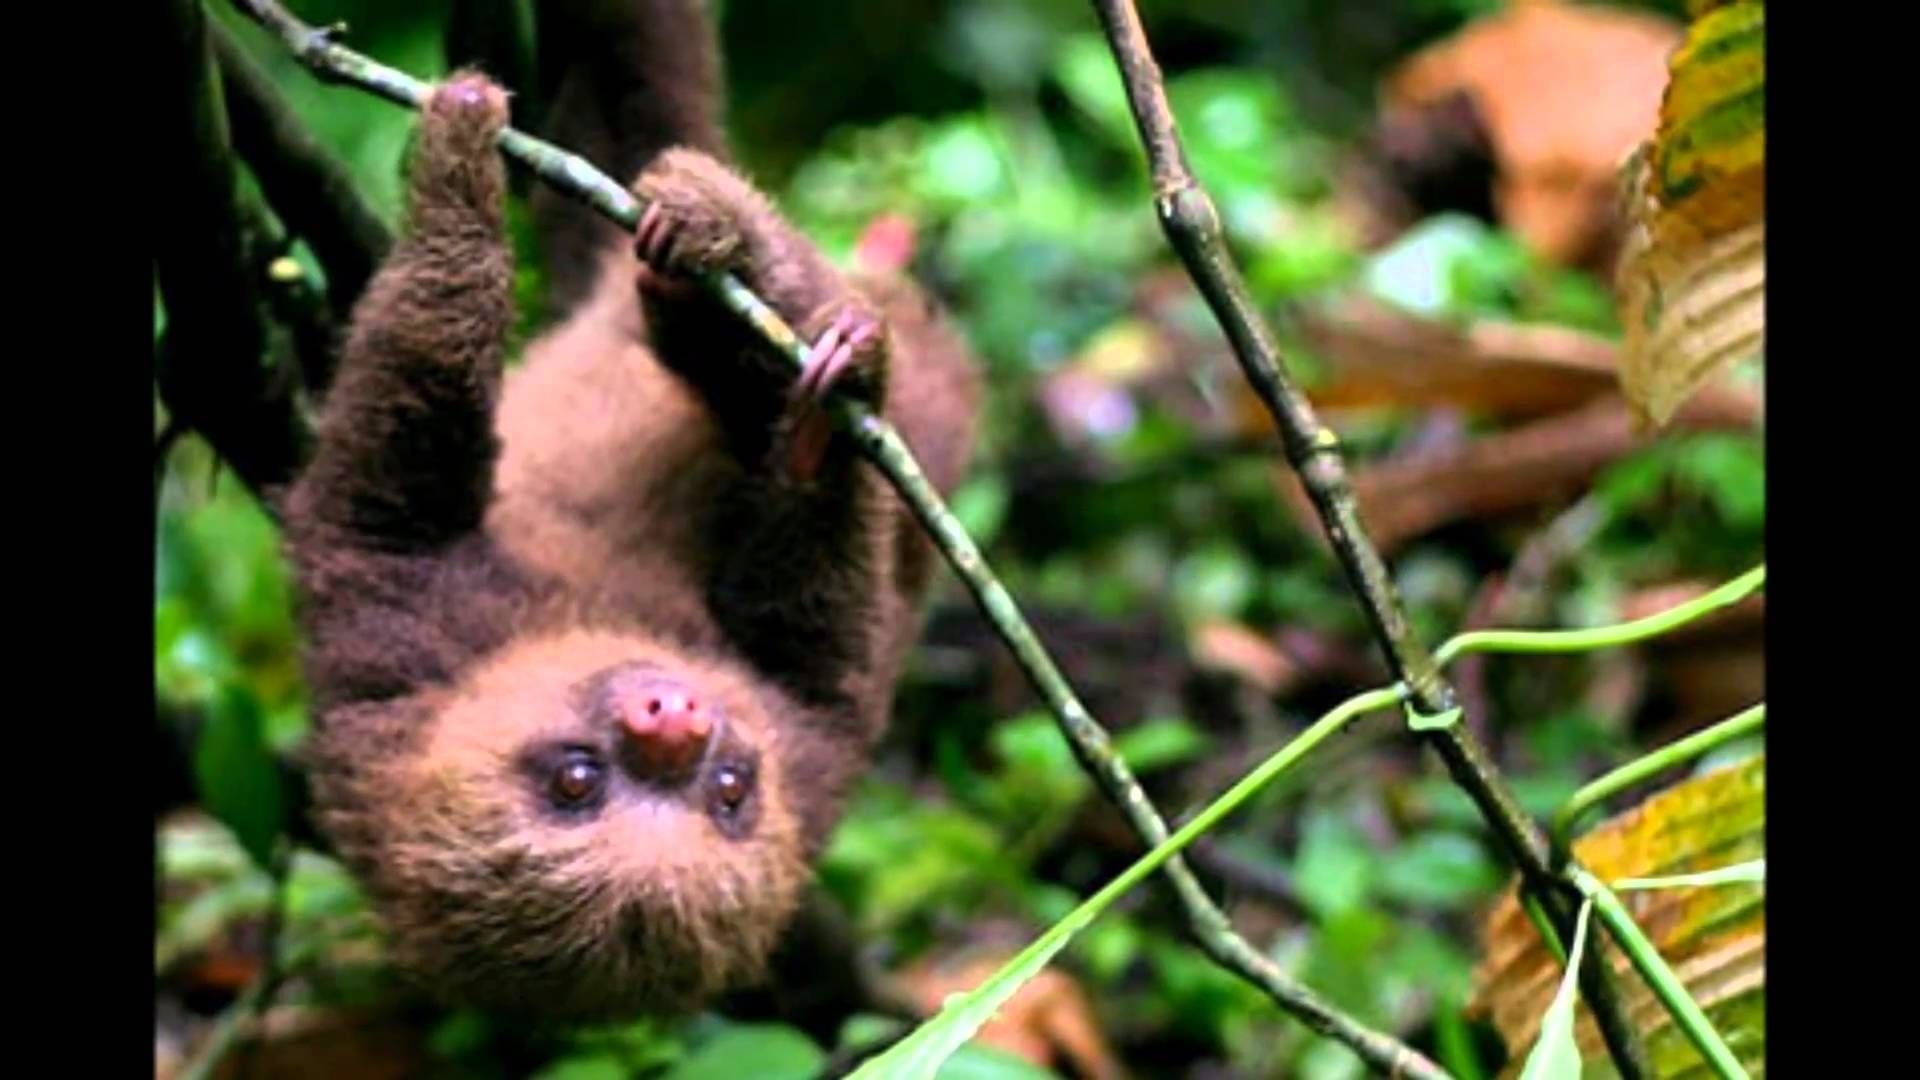 La hermosa FAUNA de Costa Rica - YouTube | fauna tica | Pinterest